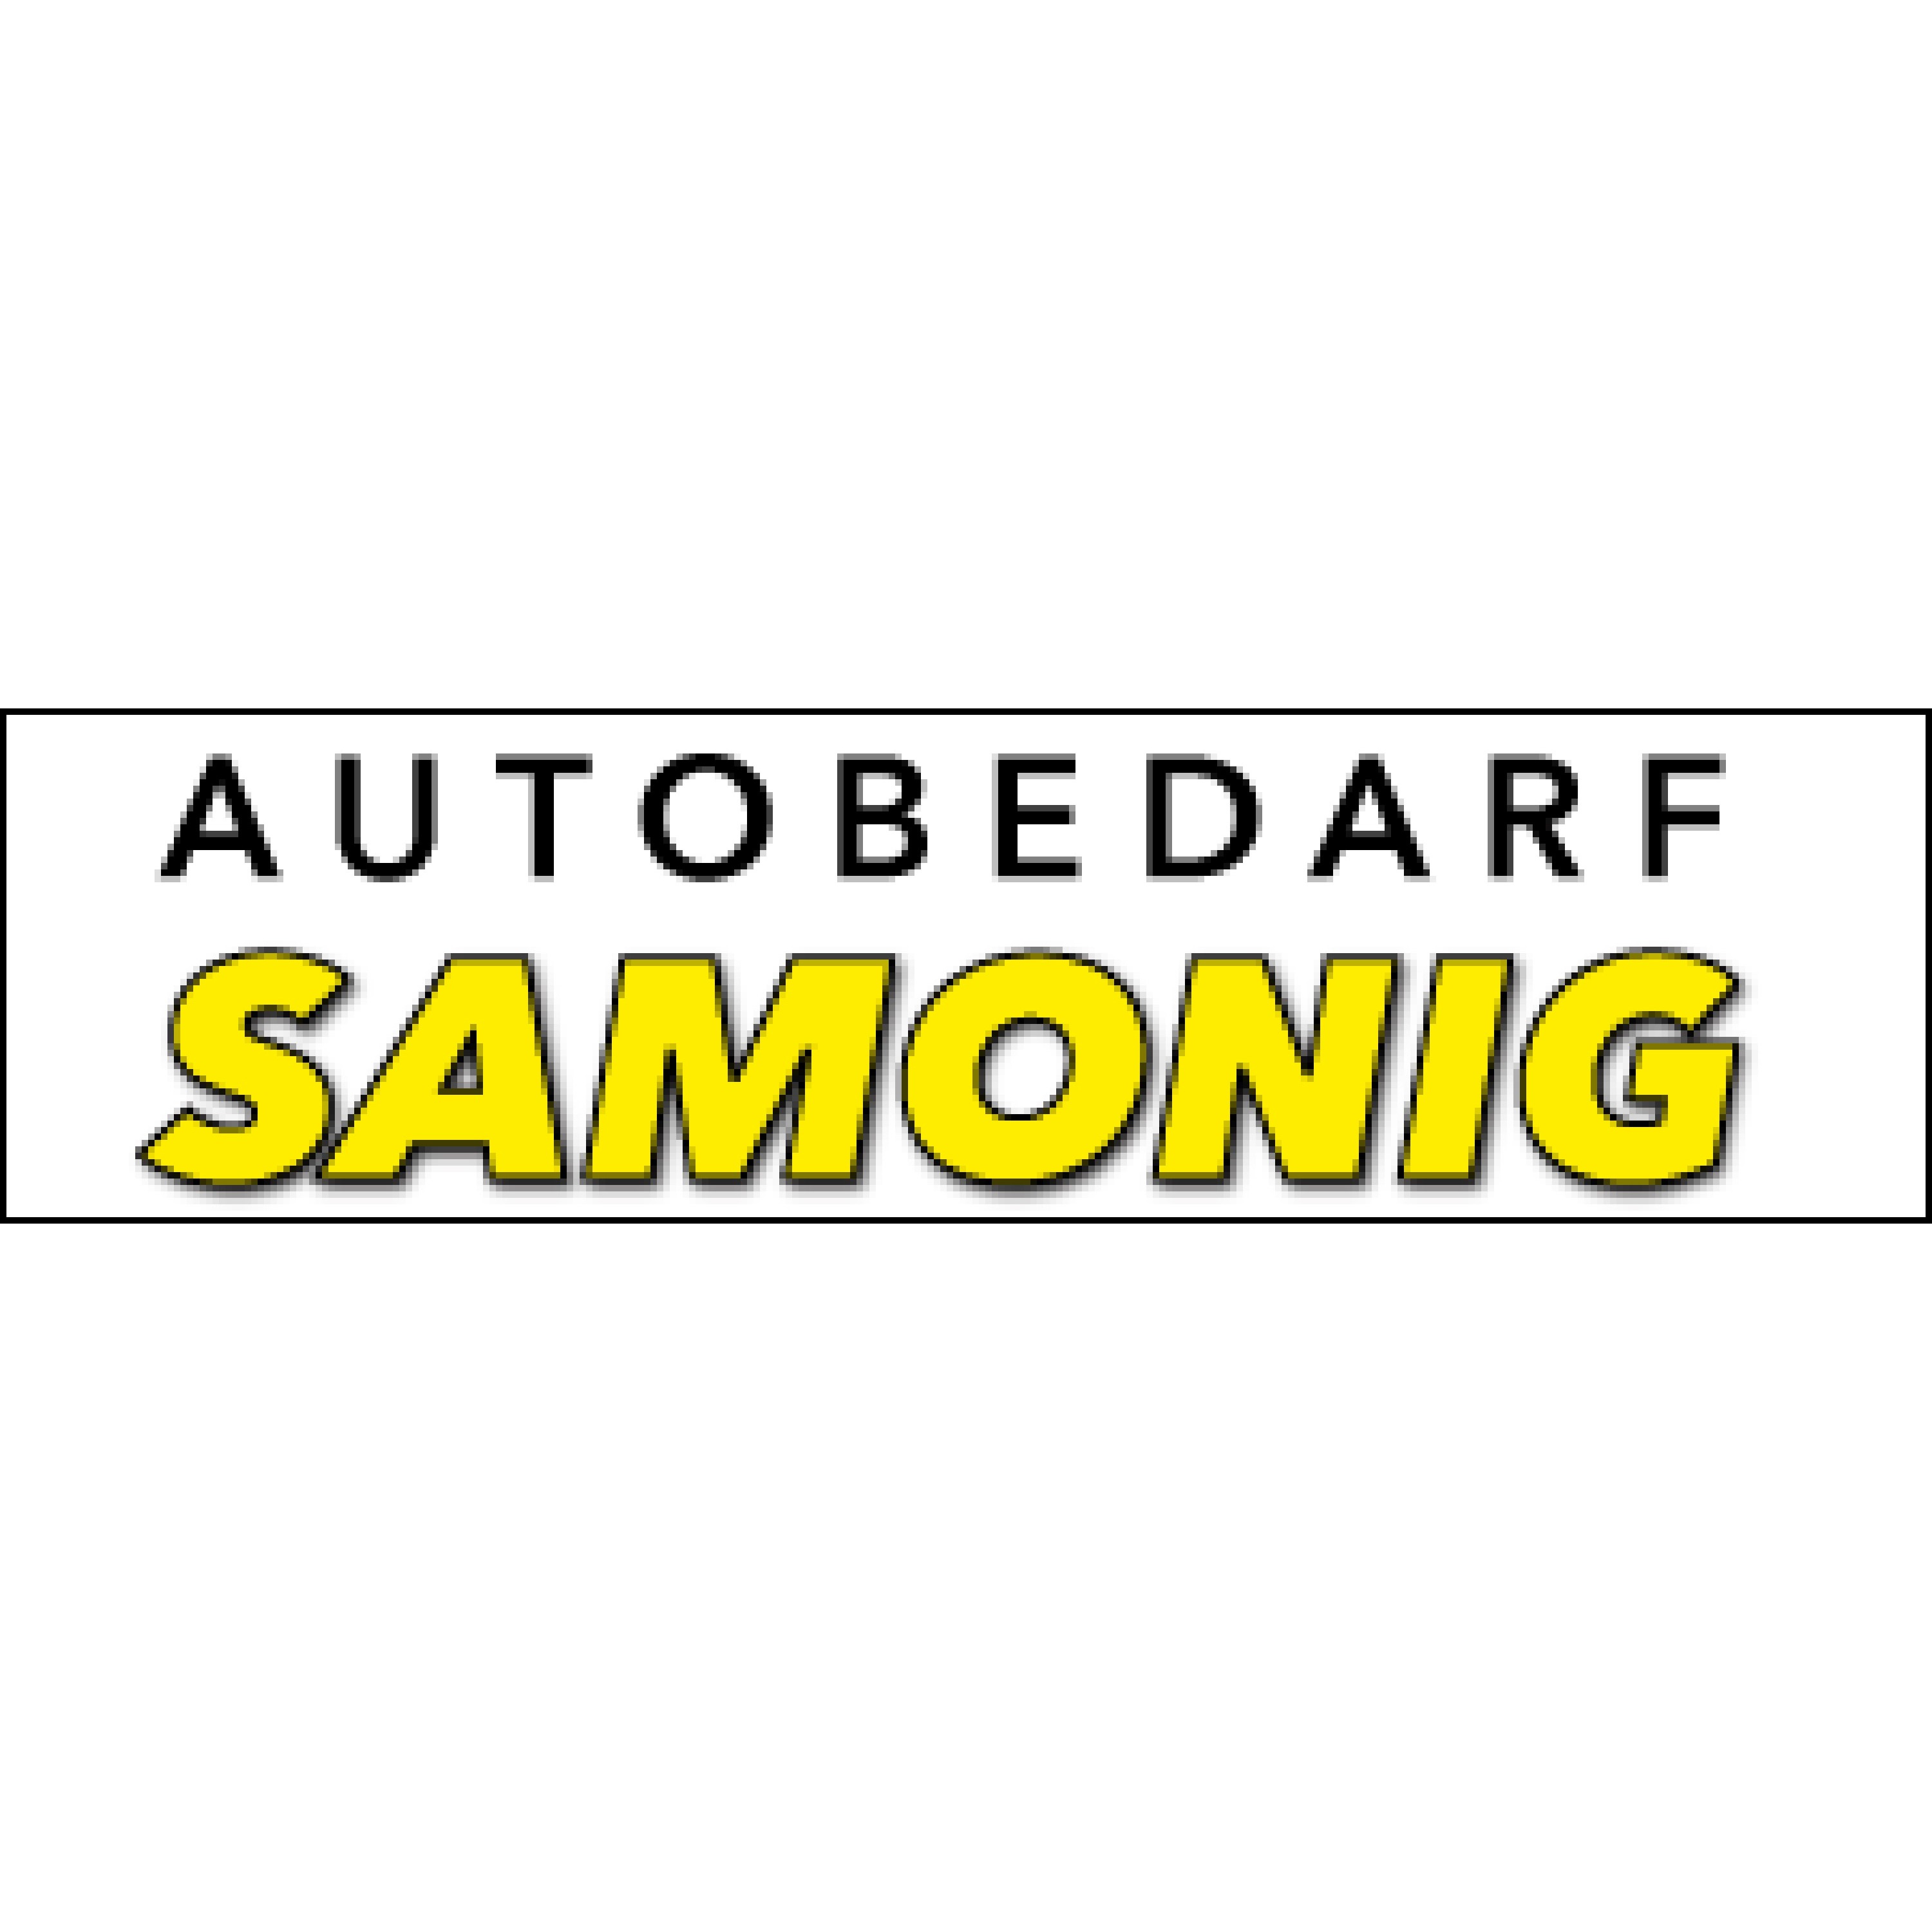 Autobedarf Samonig Logo